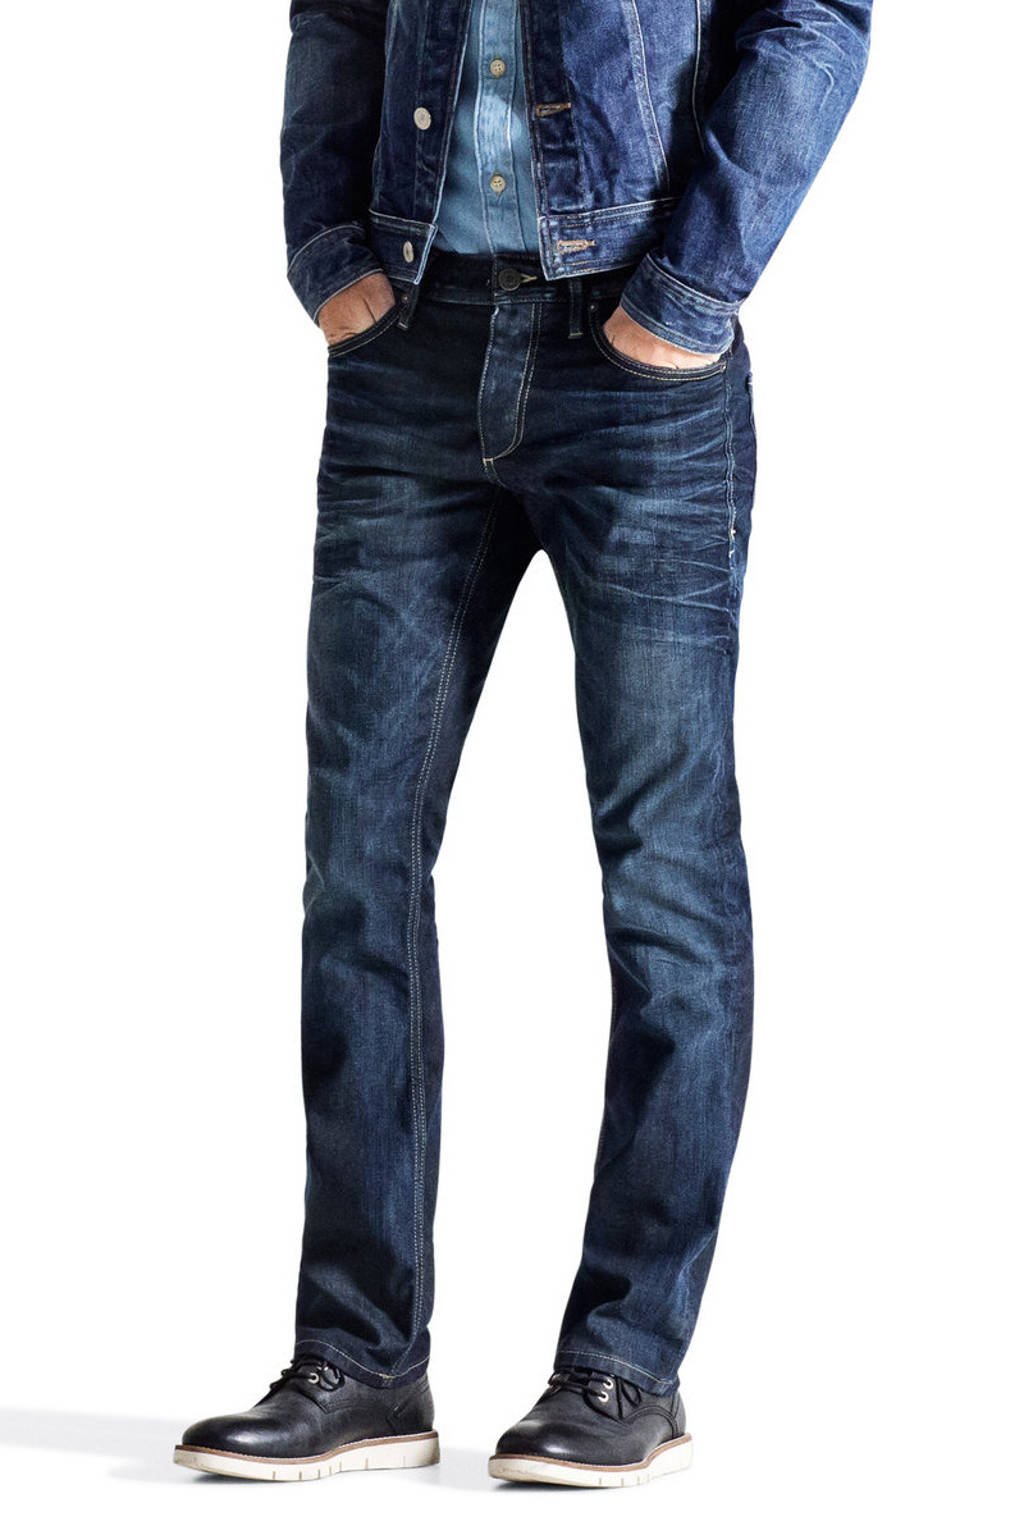 JACK & JONES JEANS INTELLIGENCE regular fit jeans JJICLARK JJORIGINAL blue denim, 318 Blue Denim